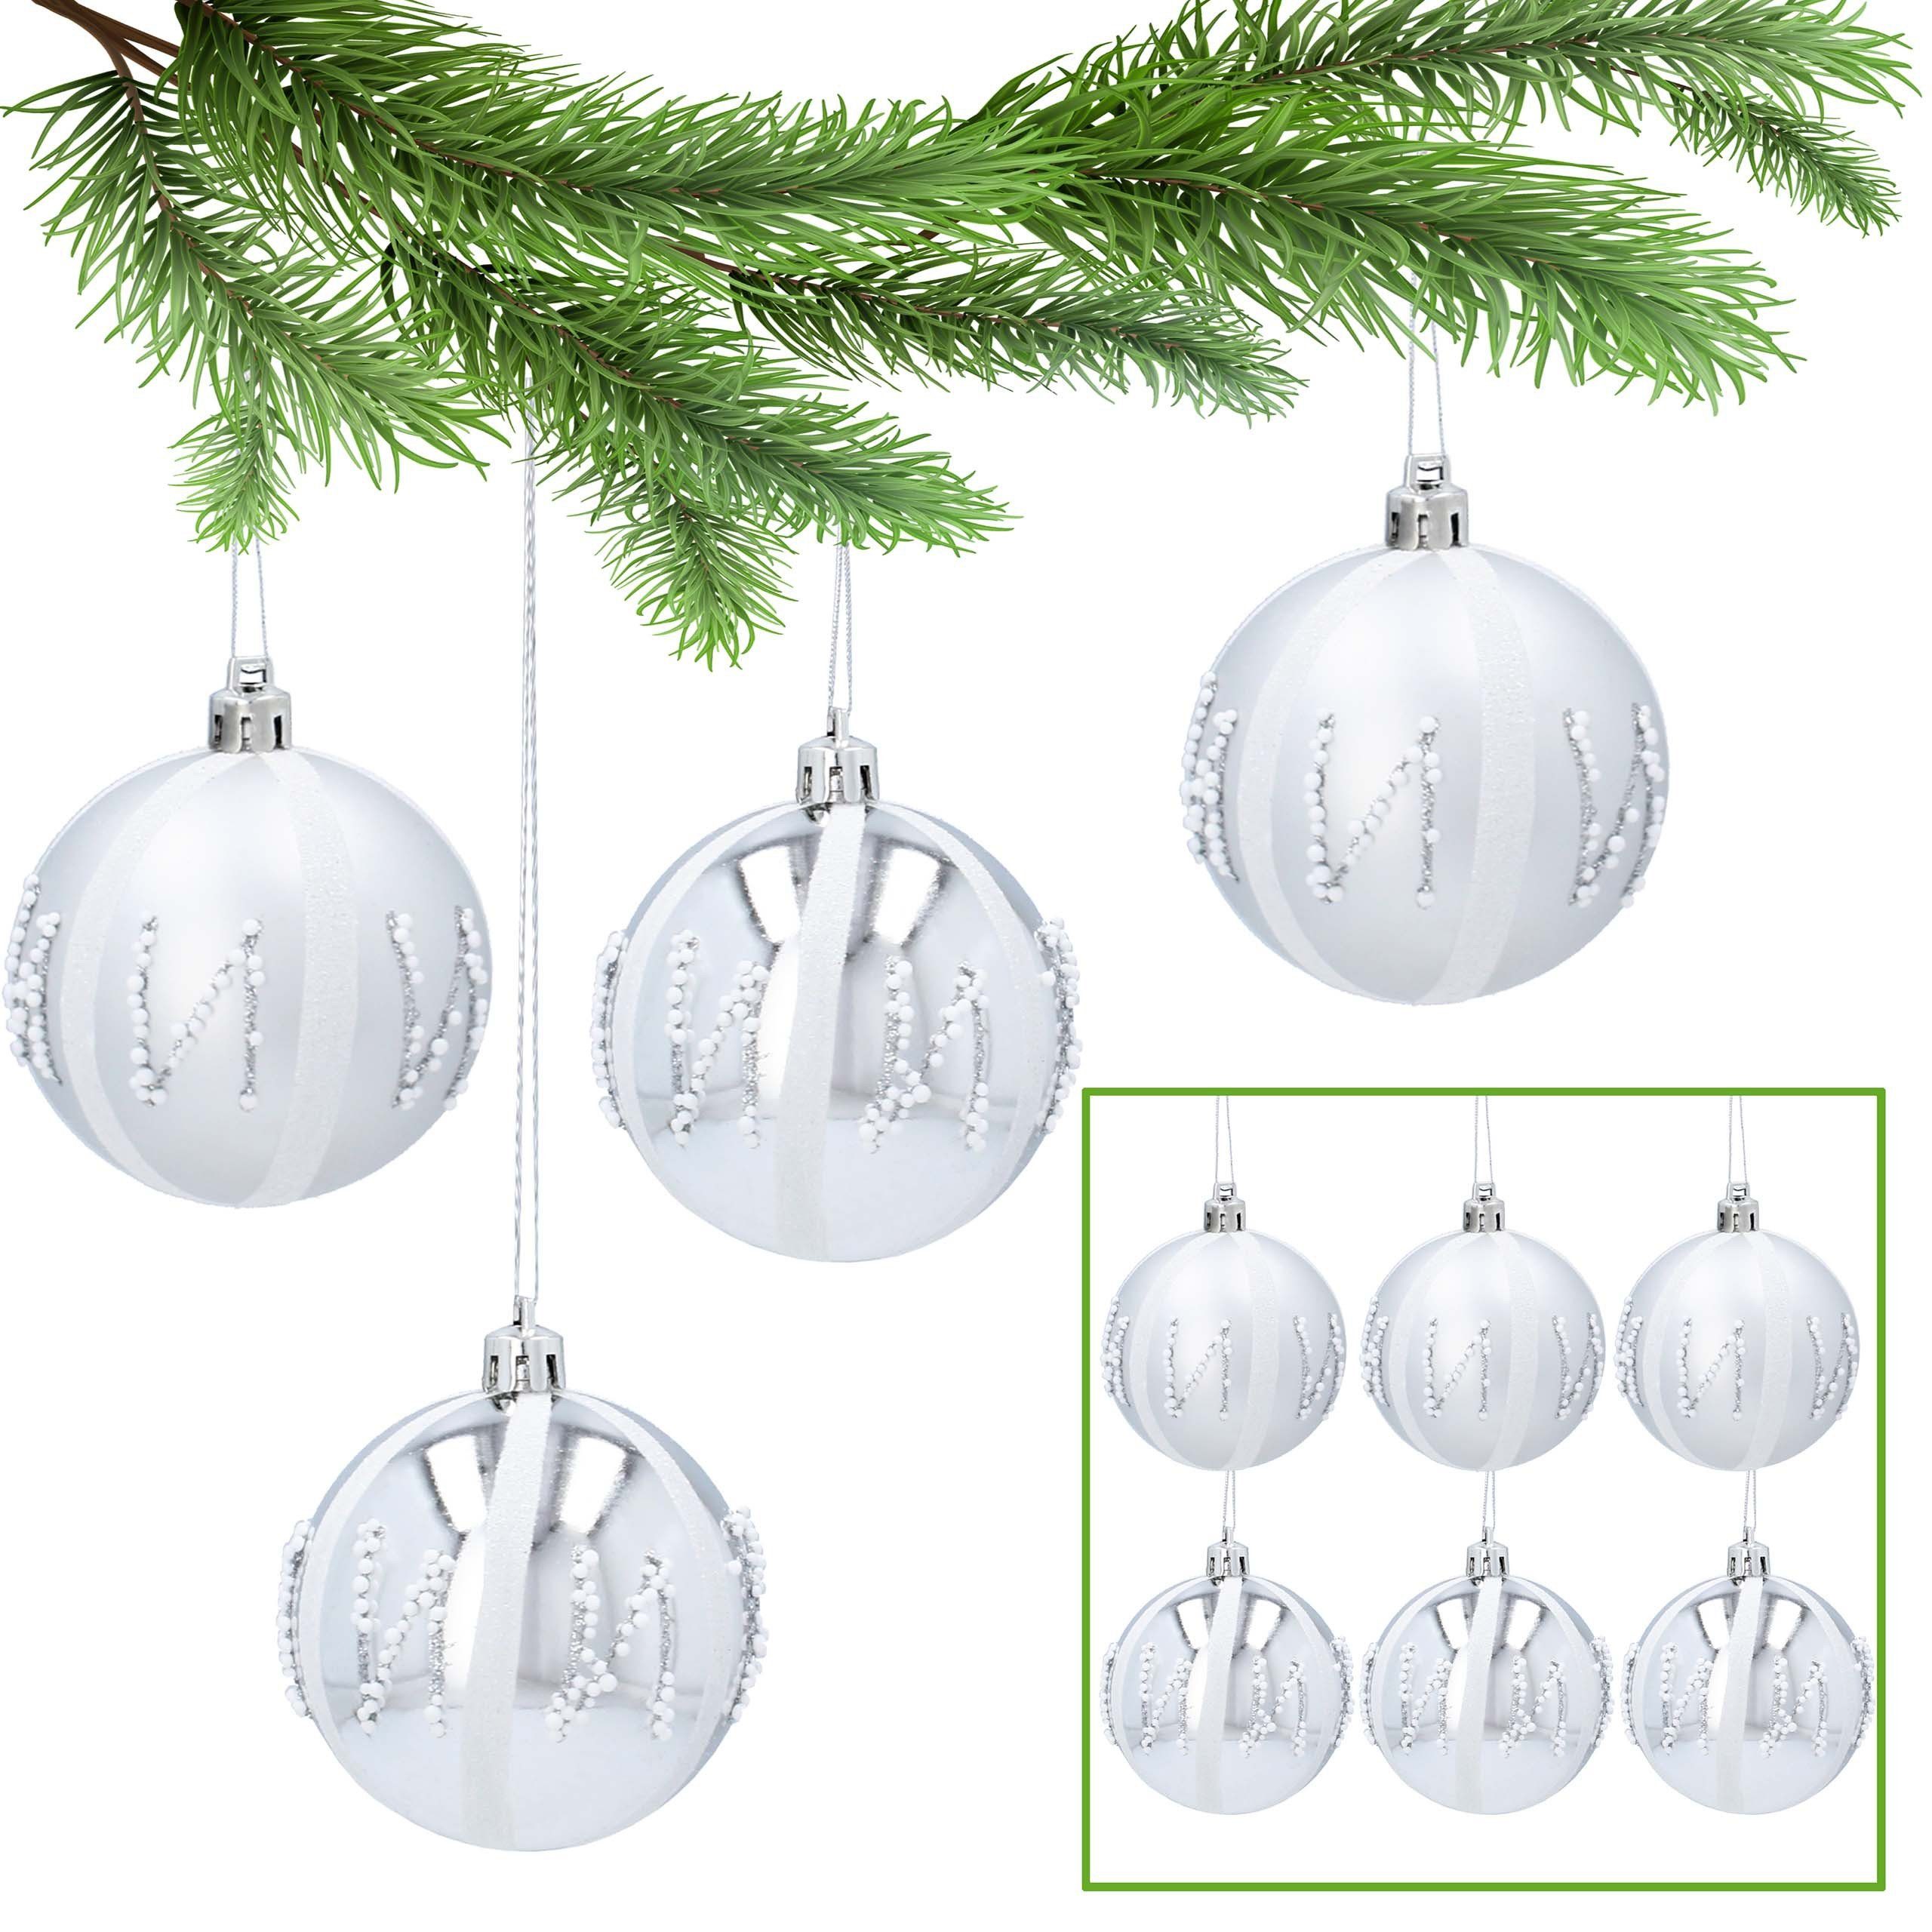 Sarcia.eu Weihnachtsbaumkugel Christbaumkugelset aus Kunststoff, silbern 7cm, 6 Stück x 1 Pack